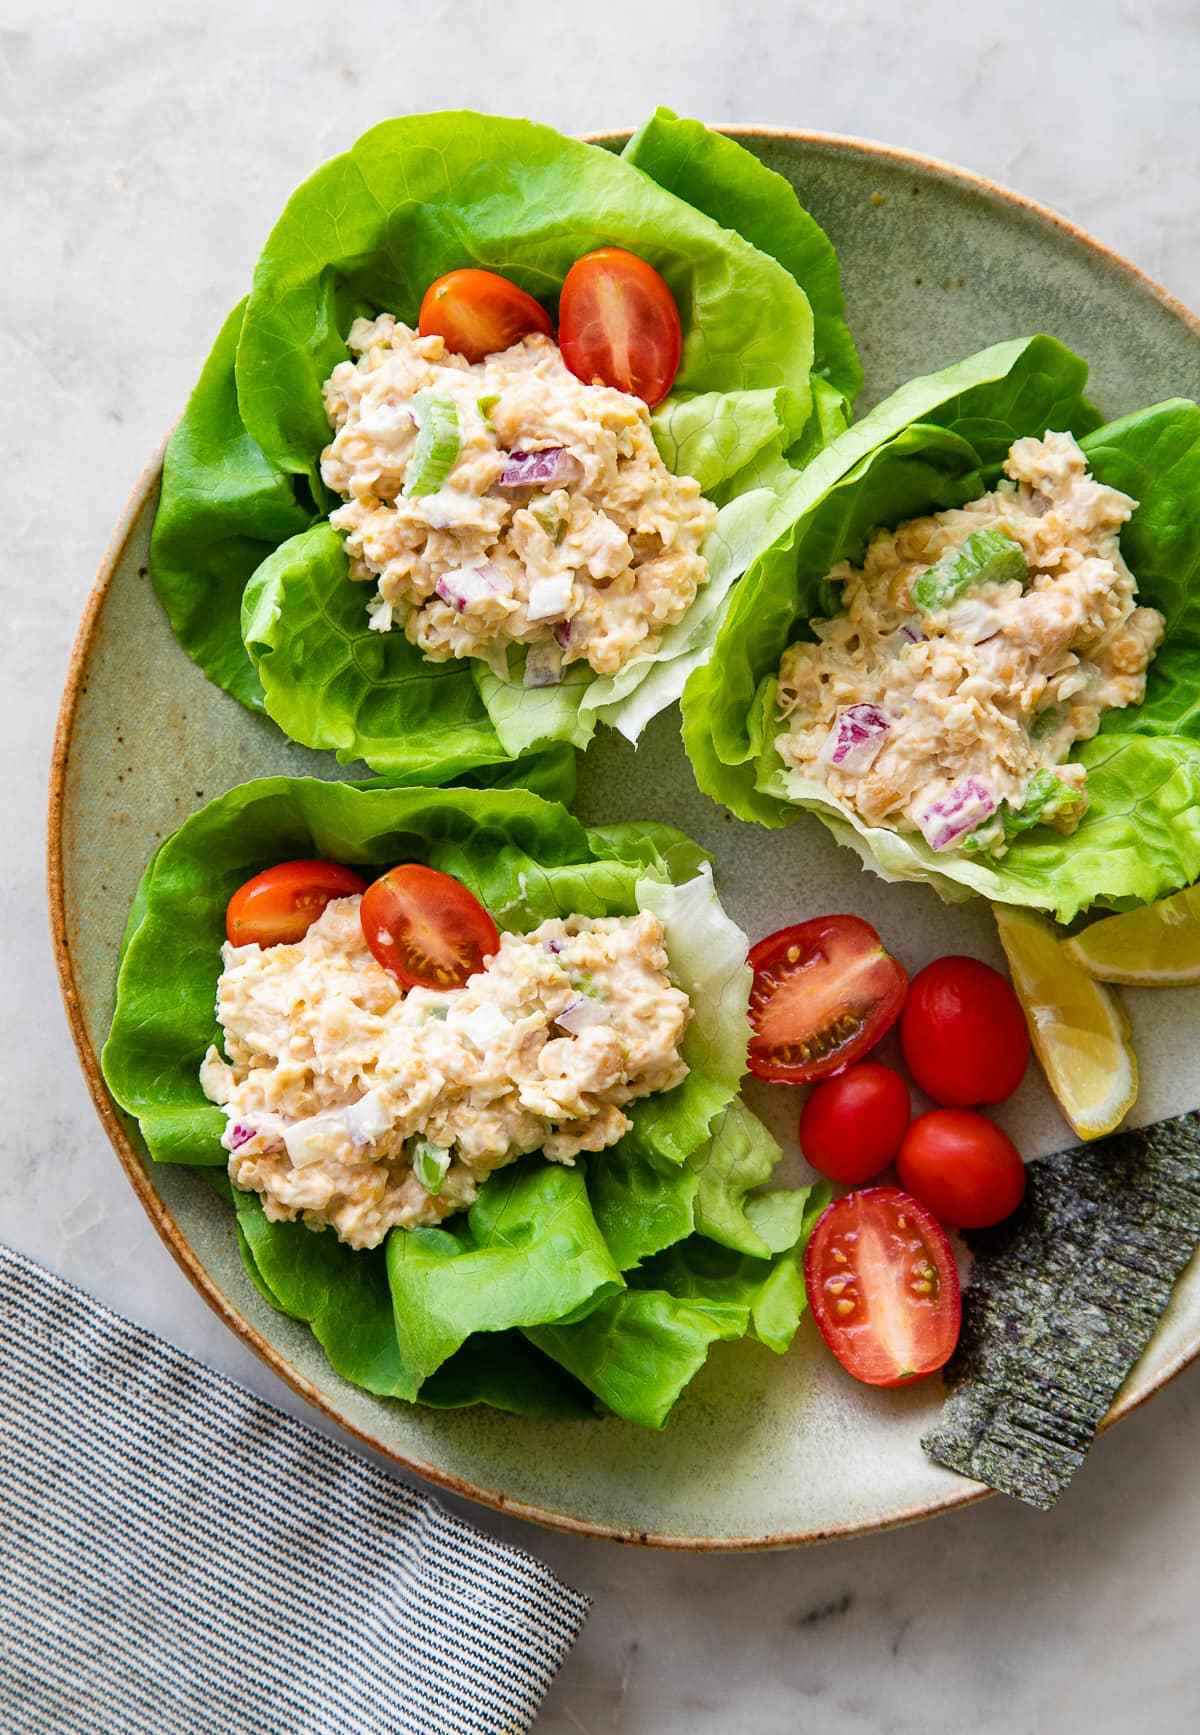 PHOTO: Vegan chickpea "tuna" salad served in lettuce cups.